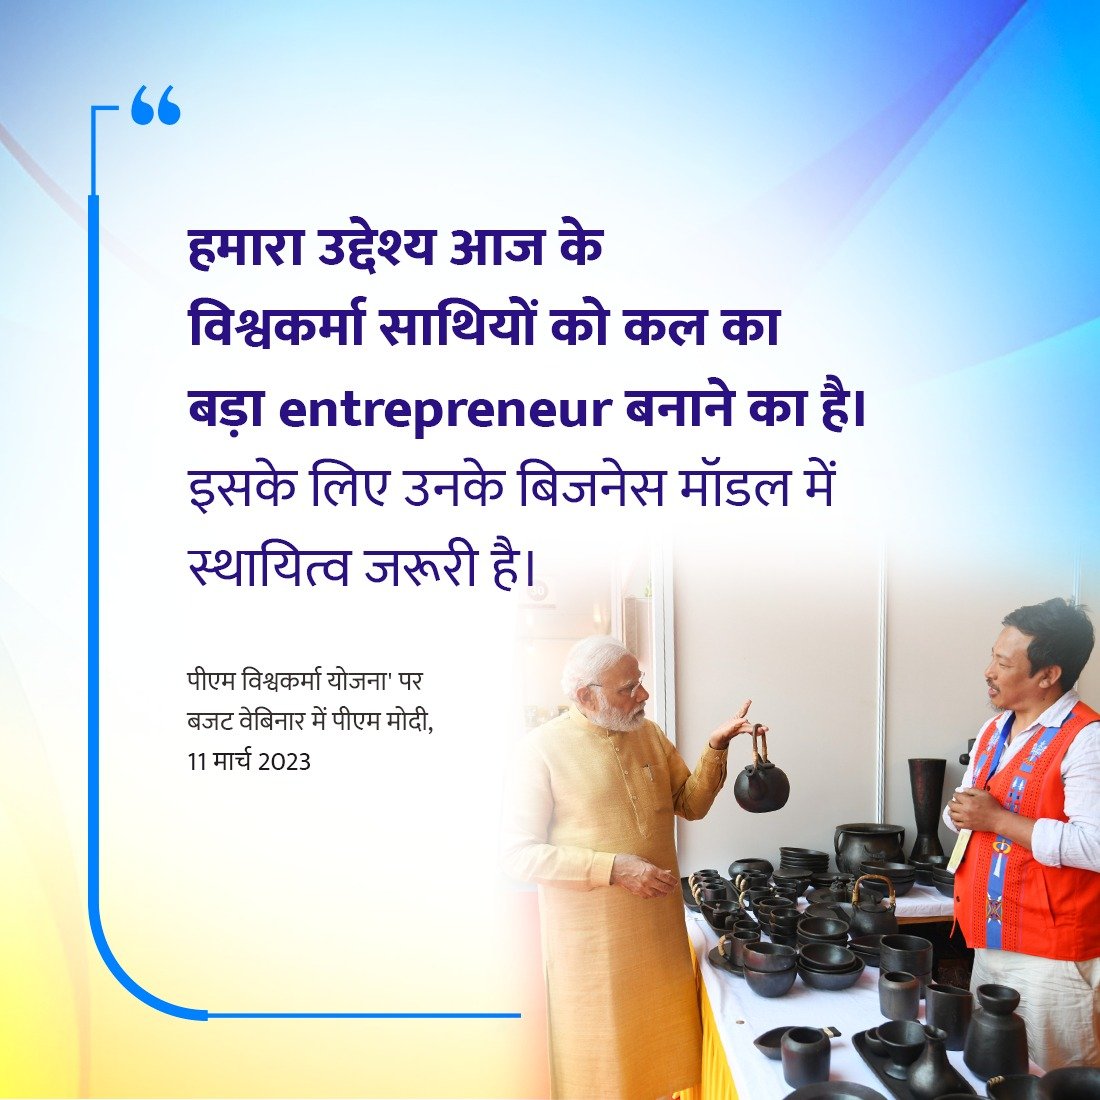 The Vishwakarmas of today can become entrepreneurs of tomorrow.

-Hon'ble PM Shri @narendramodi ji
 
#PostBudgetWebinar #Budget2023
#PMVikas